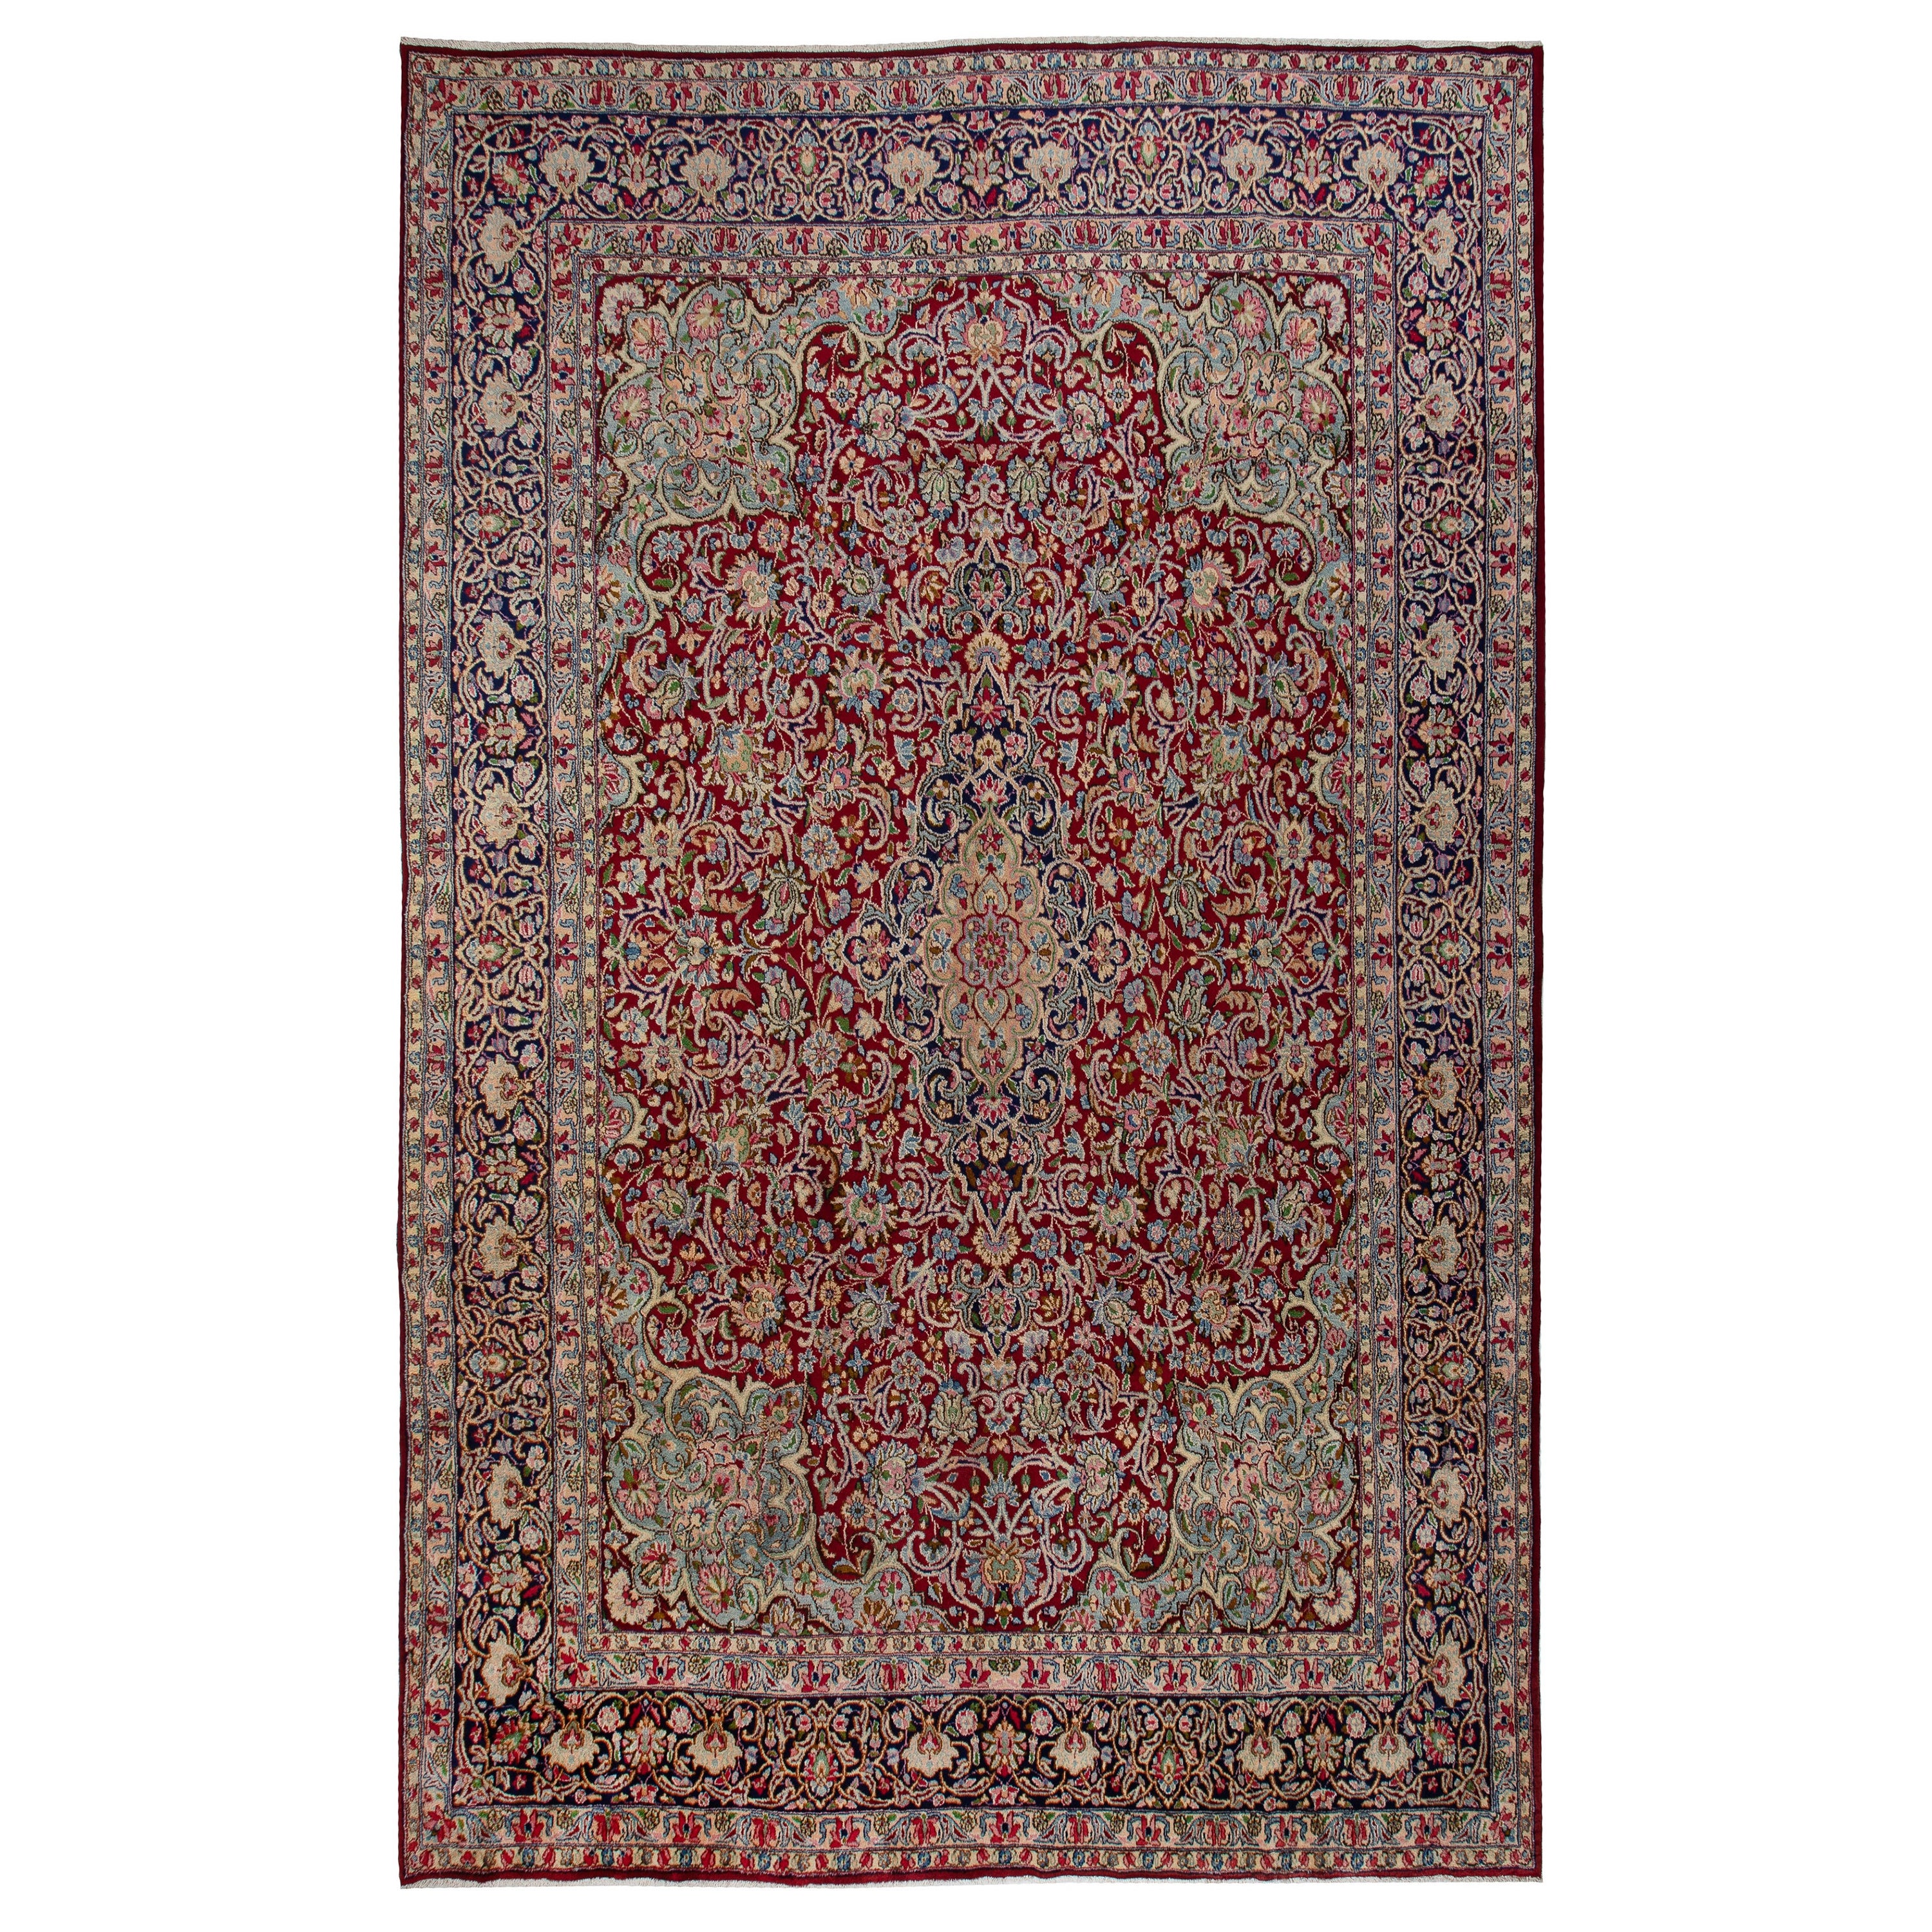 9.2x12.2 Ft Antique Persian Kashan Rug, Fine Traditional Oriental Carpet For Sale